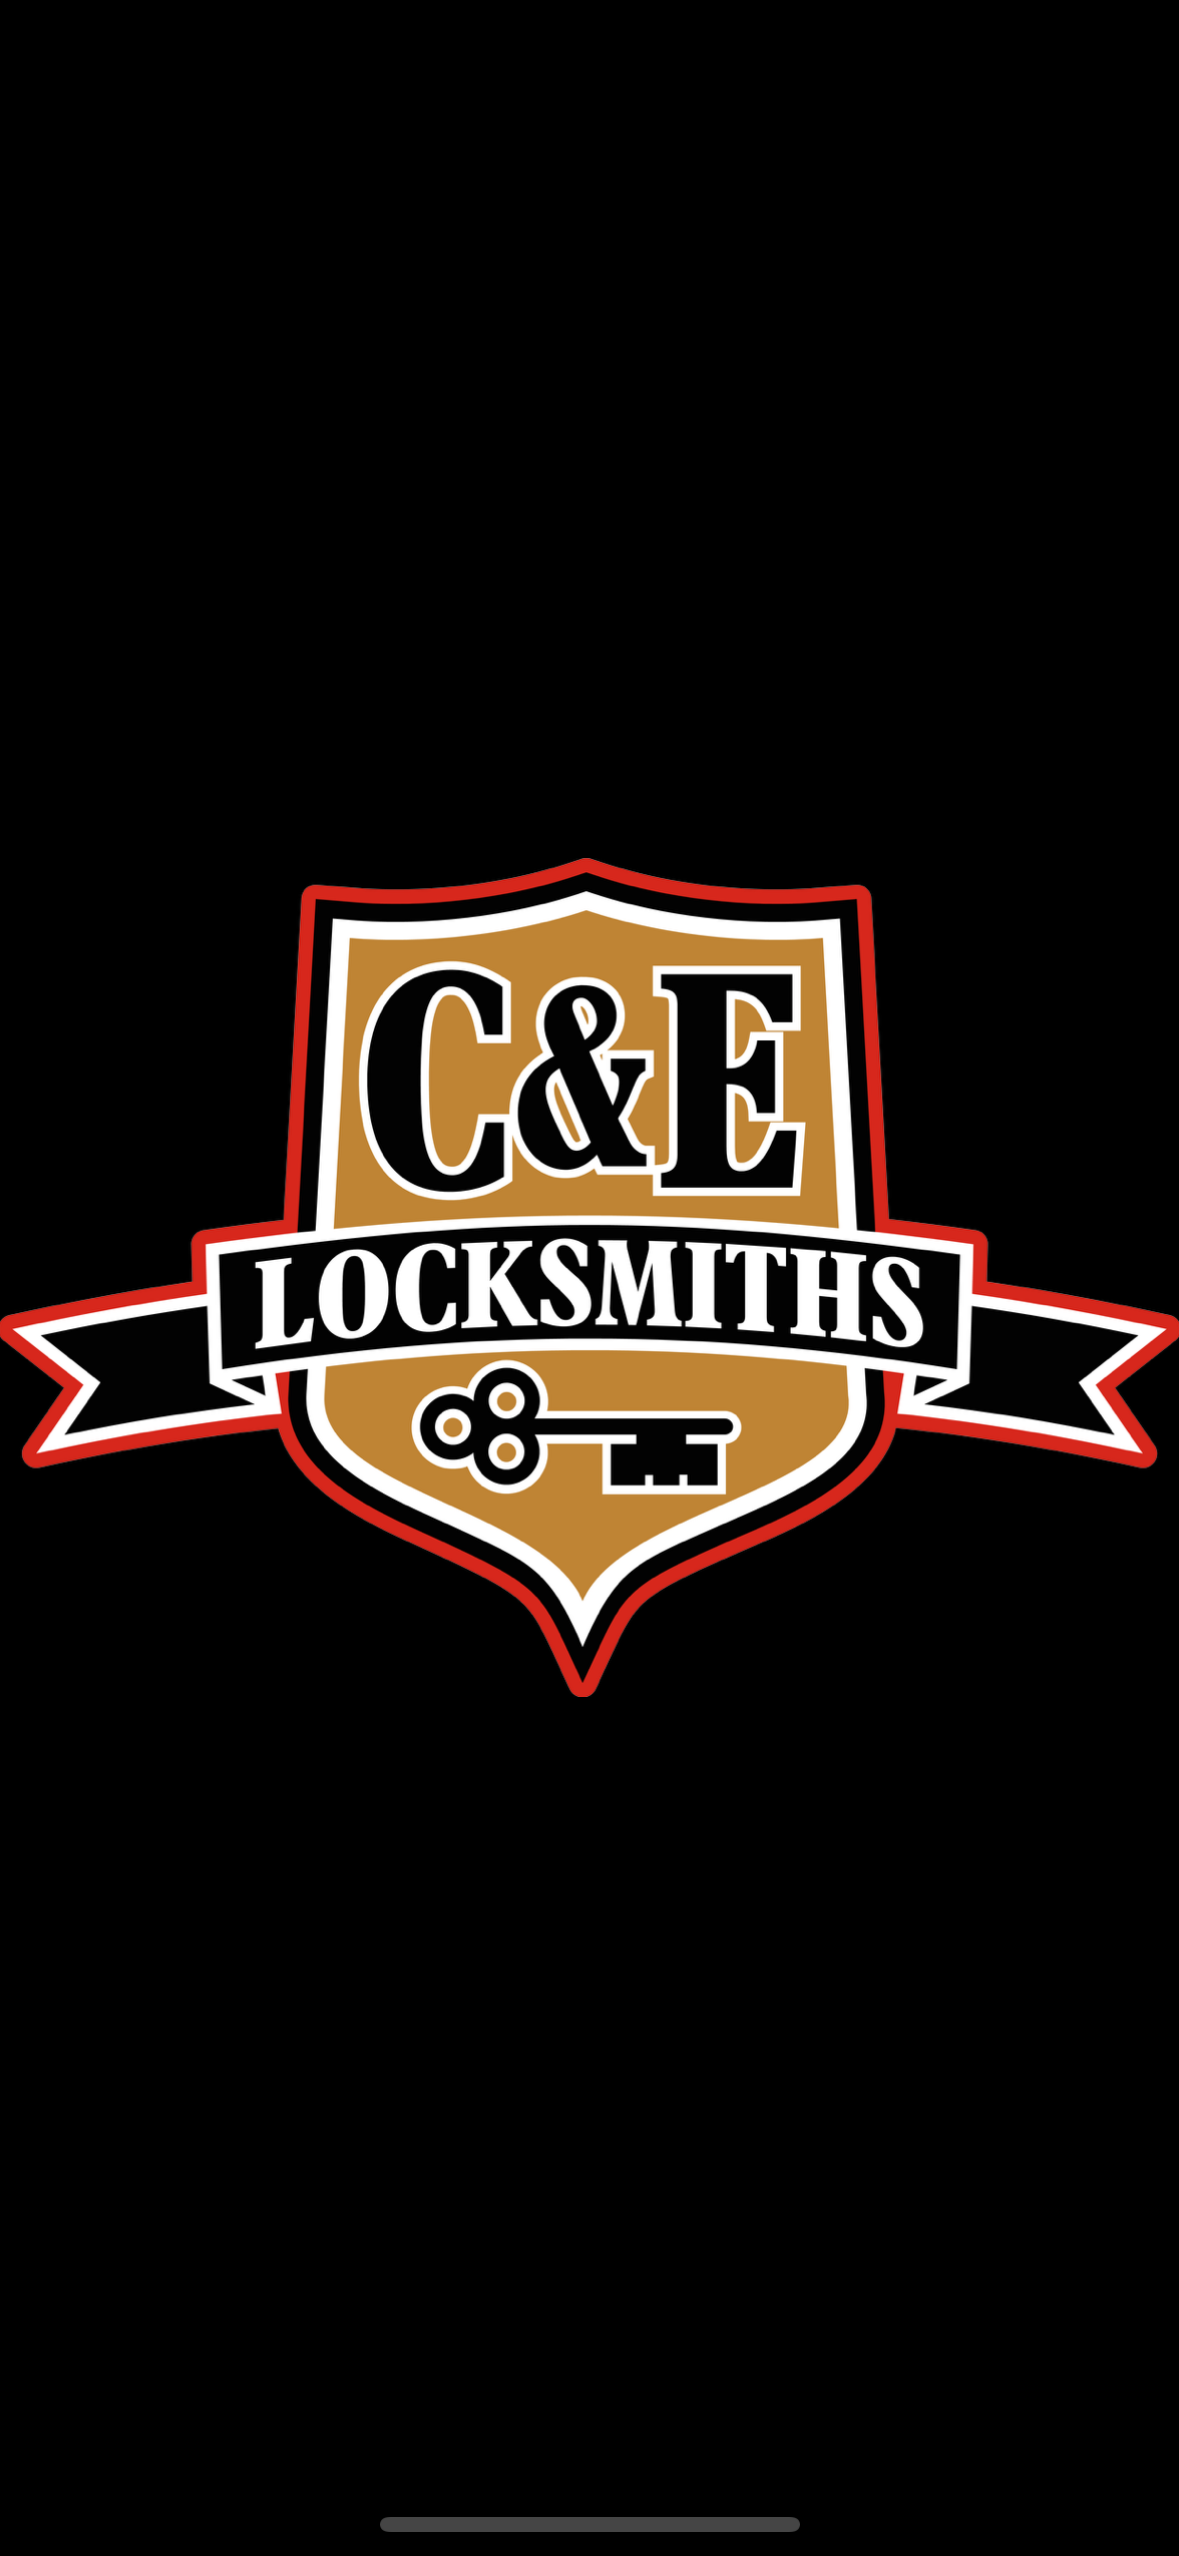 C & E Locksmith